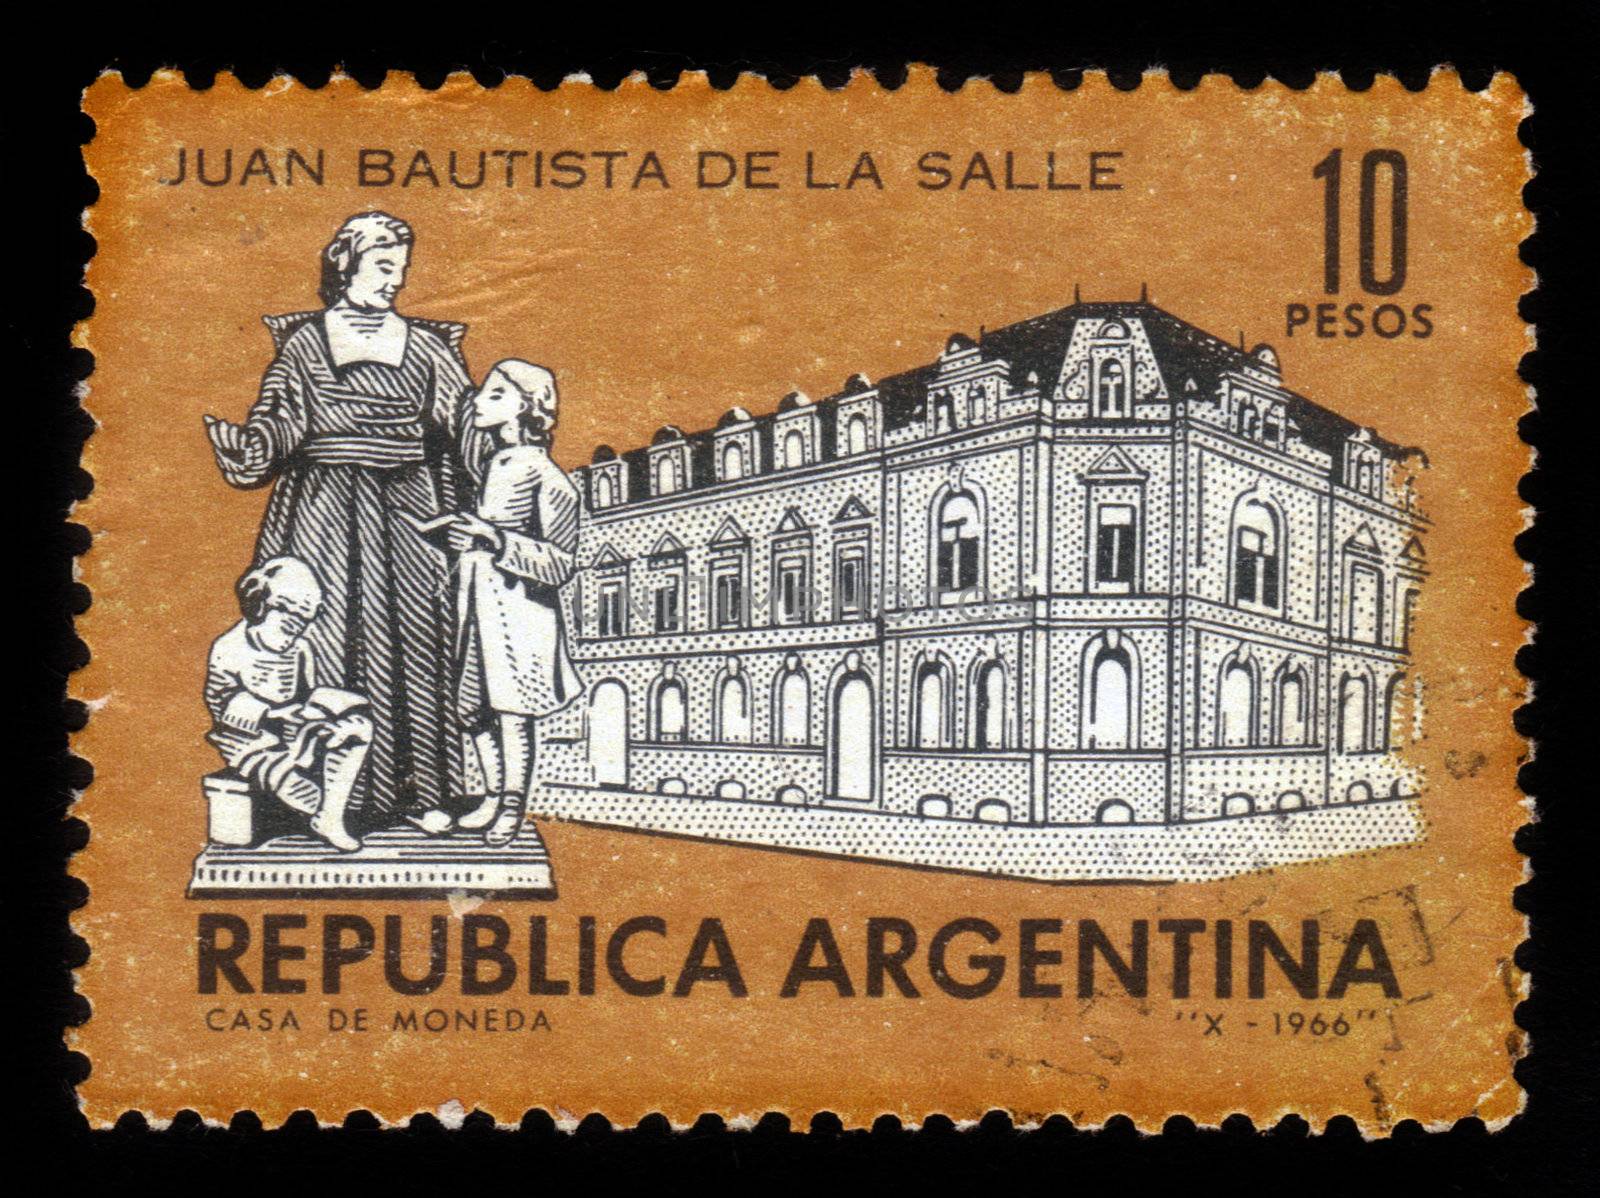 La Salle College and Monument of John Baptist de La Salle, Argentina by irisphoto4